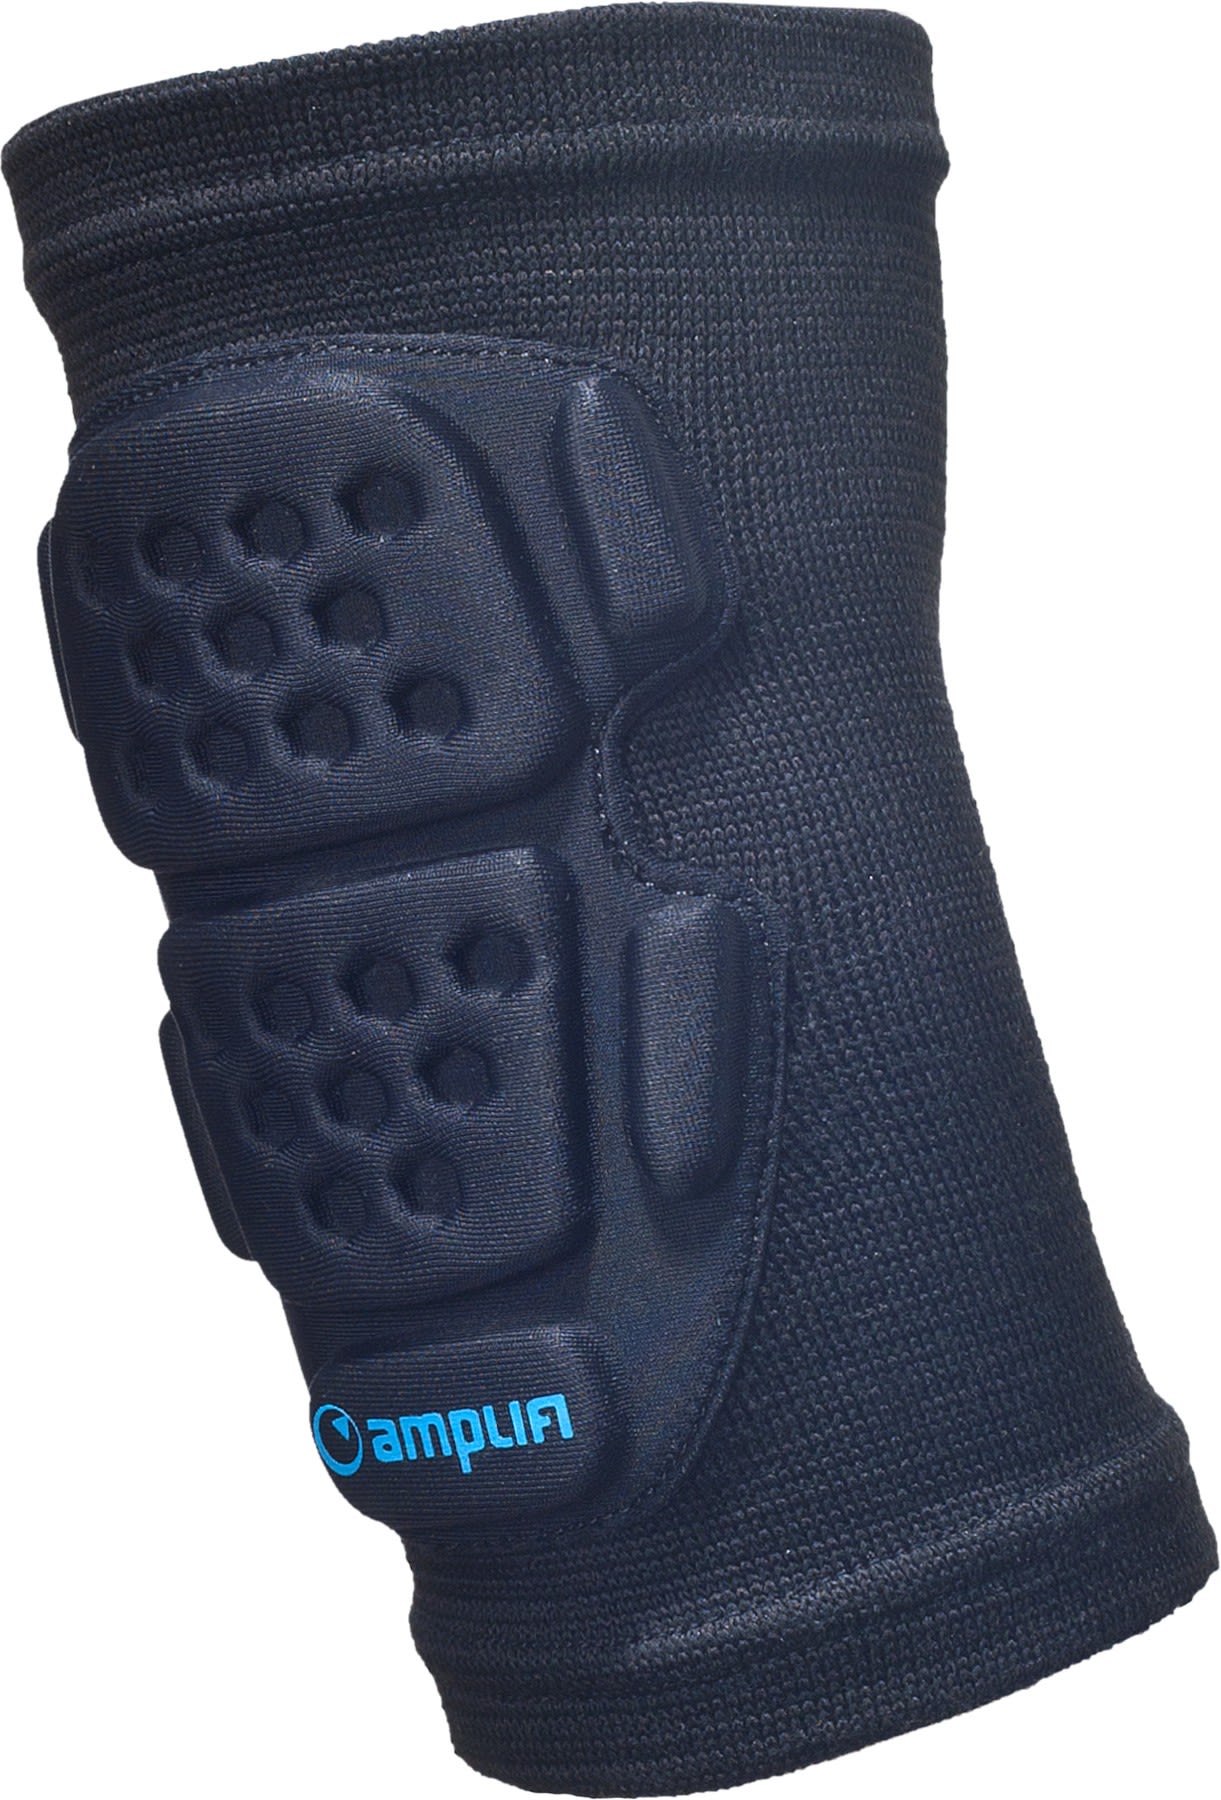 Amplifi Knee Sleeve Grom Schwarz- Knieprotektoren- Grsse XS - Farbe Black